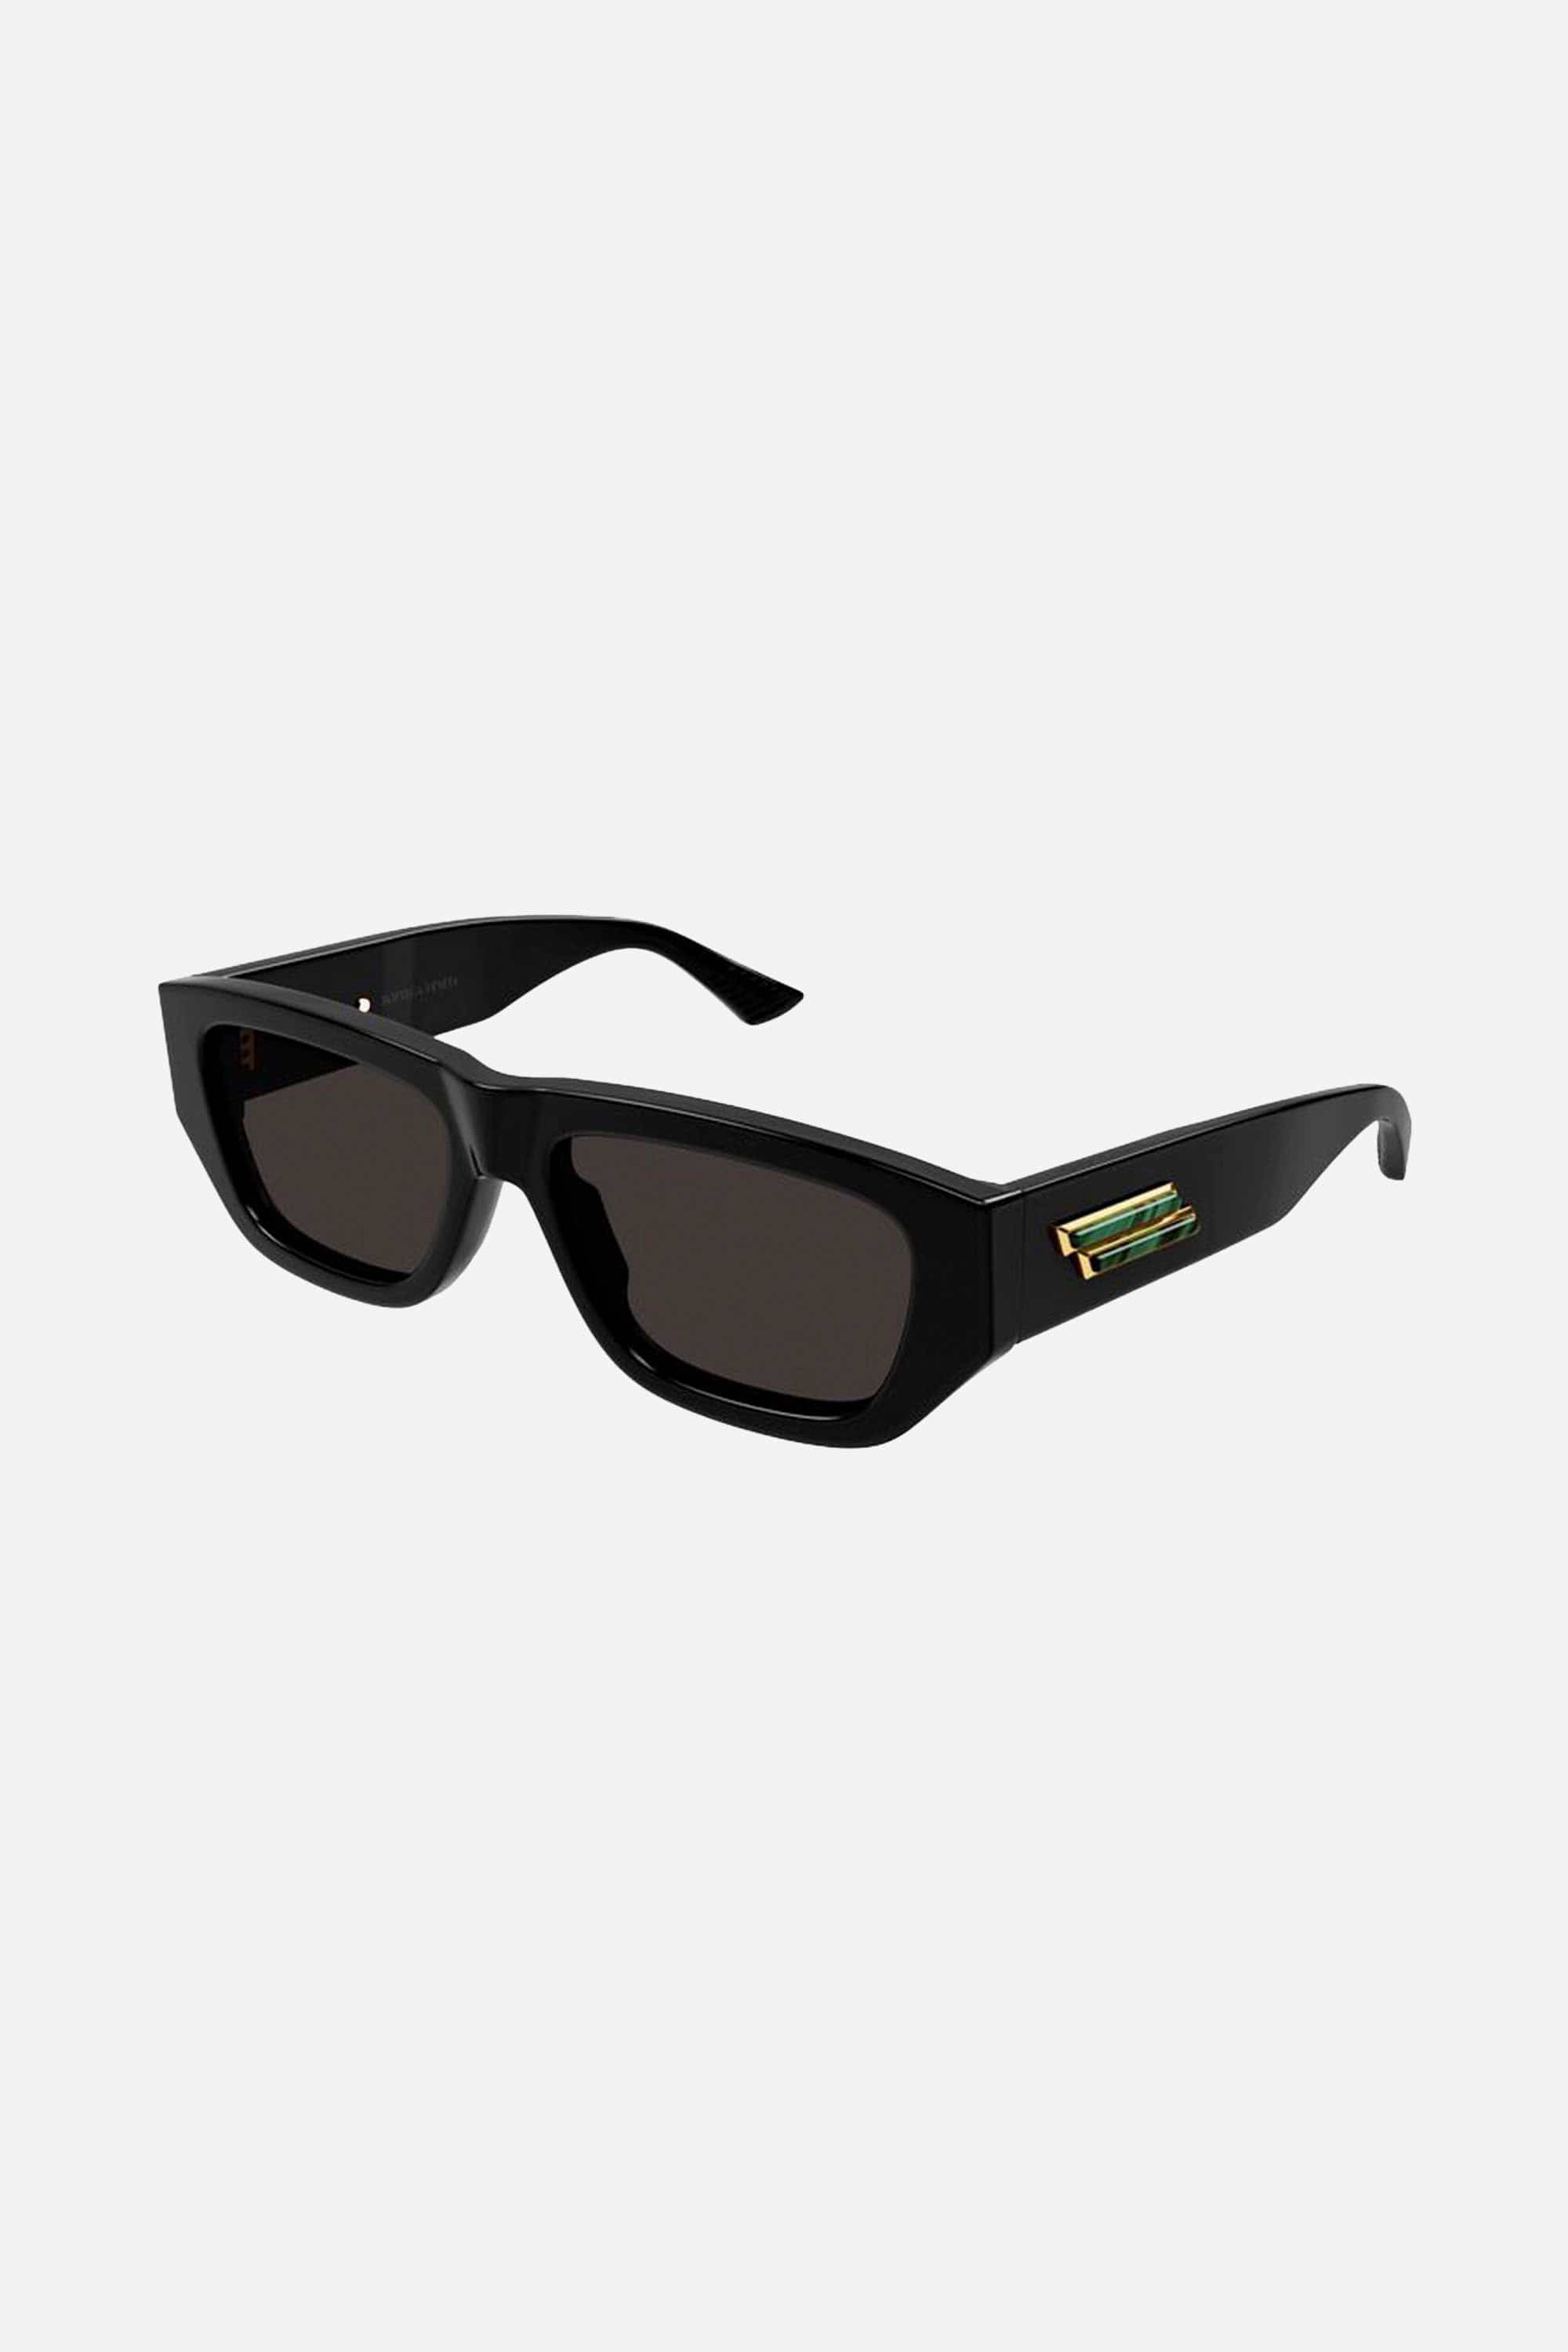 Bottega Veneta rectangular black sunglasses - Eyewear Club